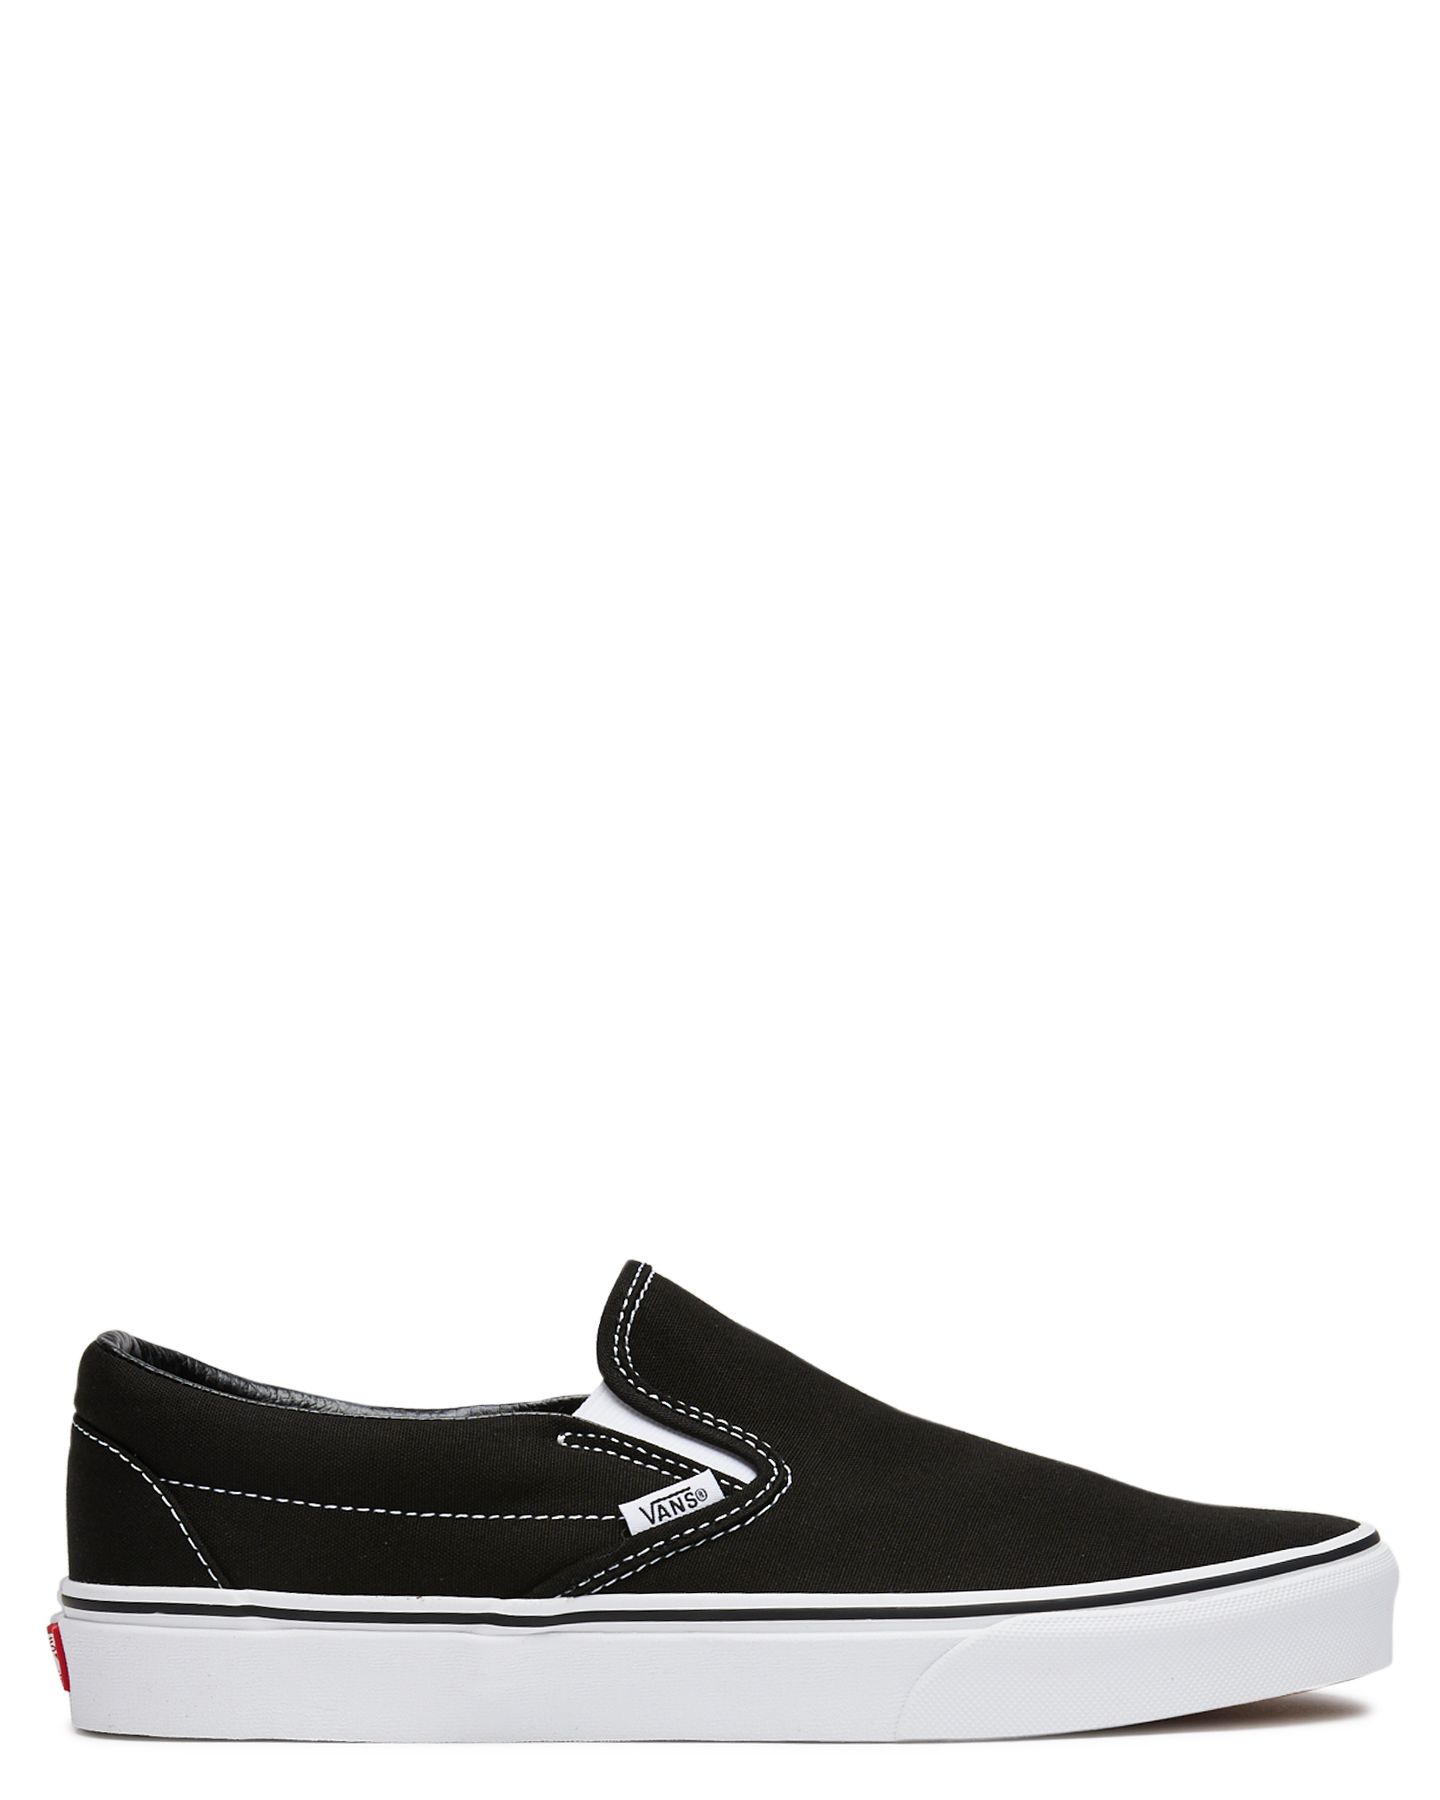 Vans Mens Classic Slip On Shoe - Black | SurfStitch